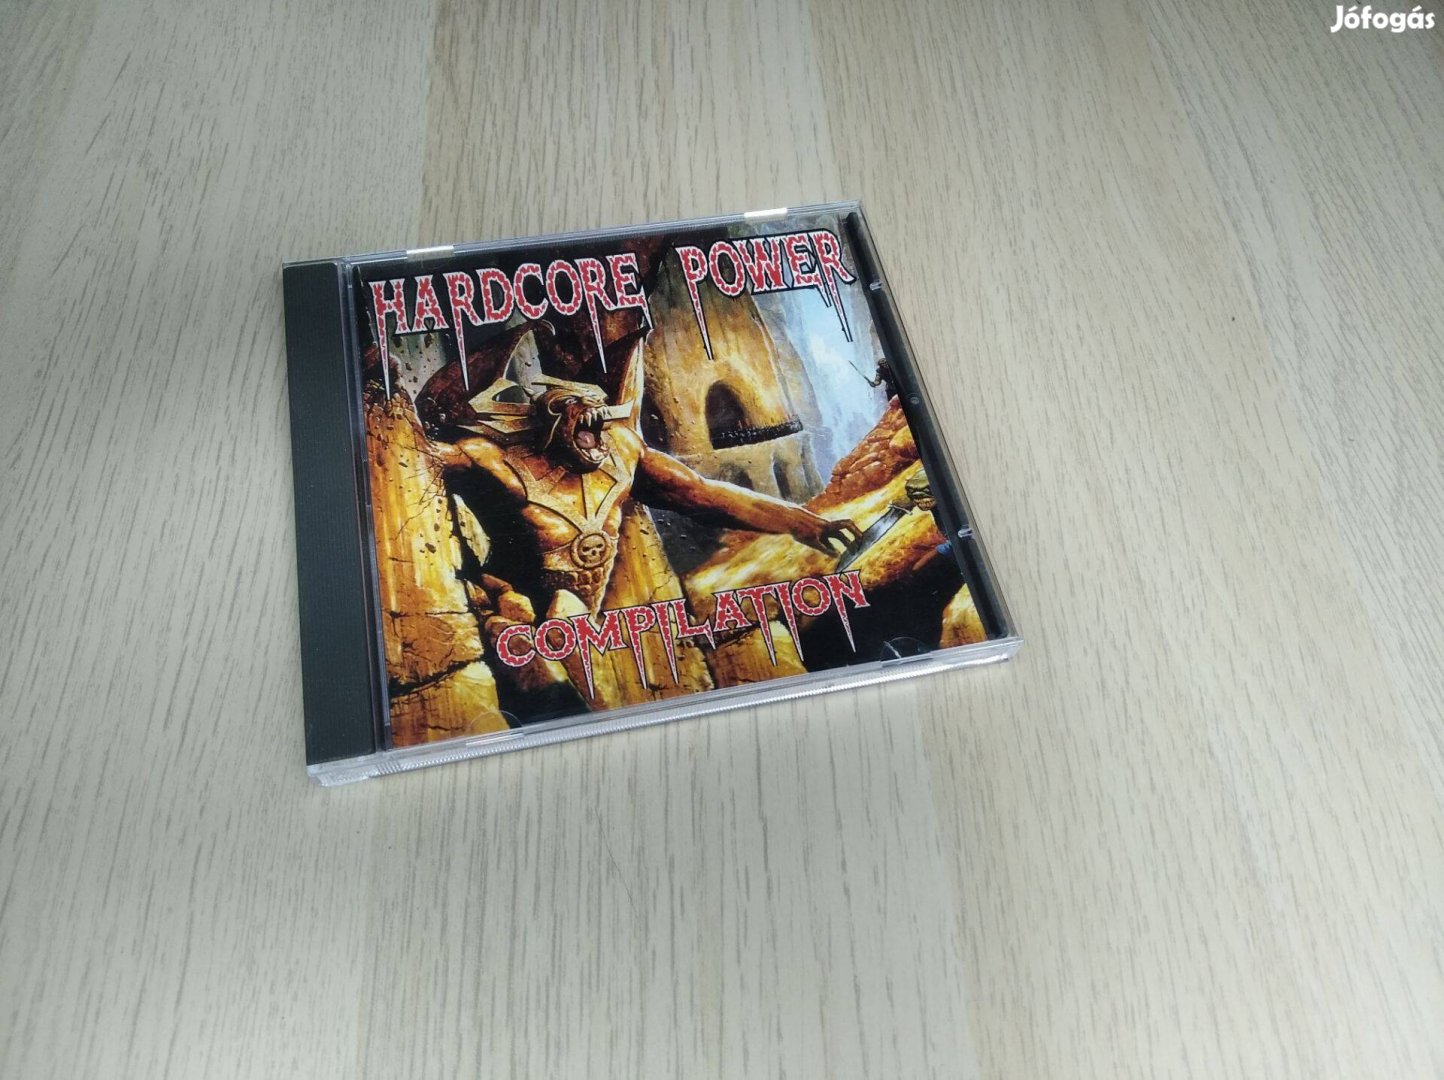 Hardcore Power Compilation / CD ( Italy 1996.)